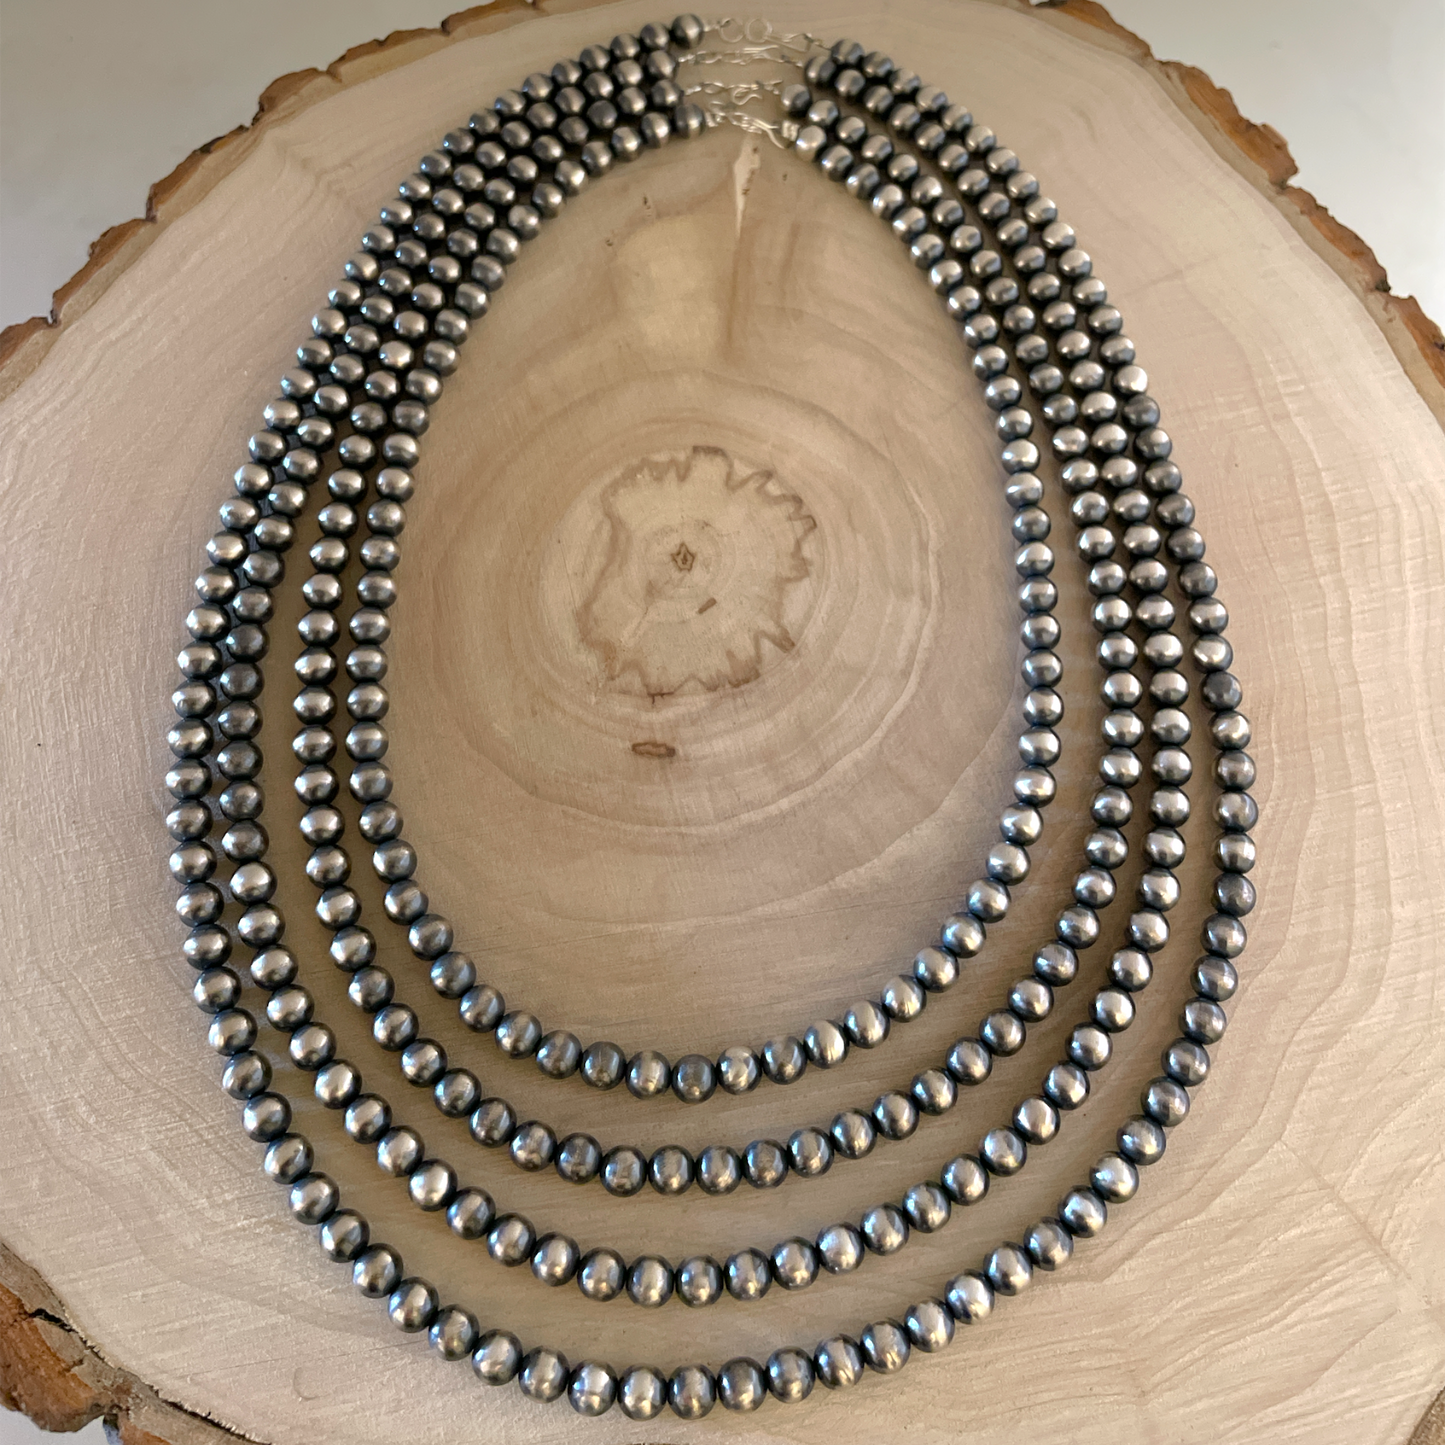 Round Navajo Pearls Necklace 6mm - 16"